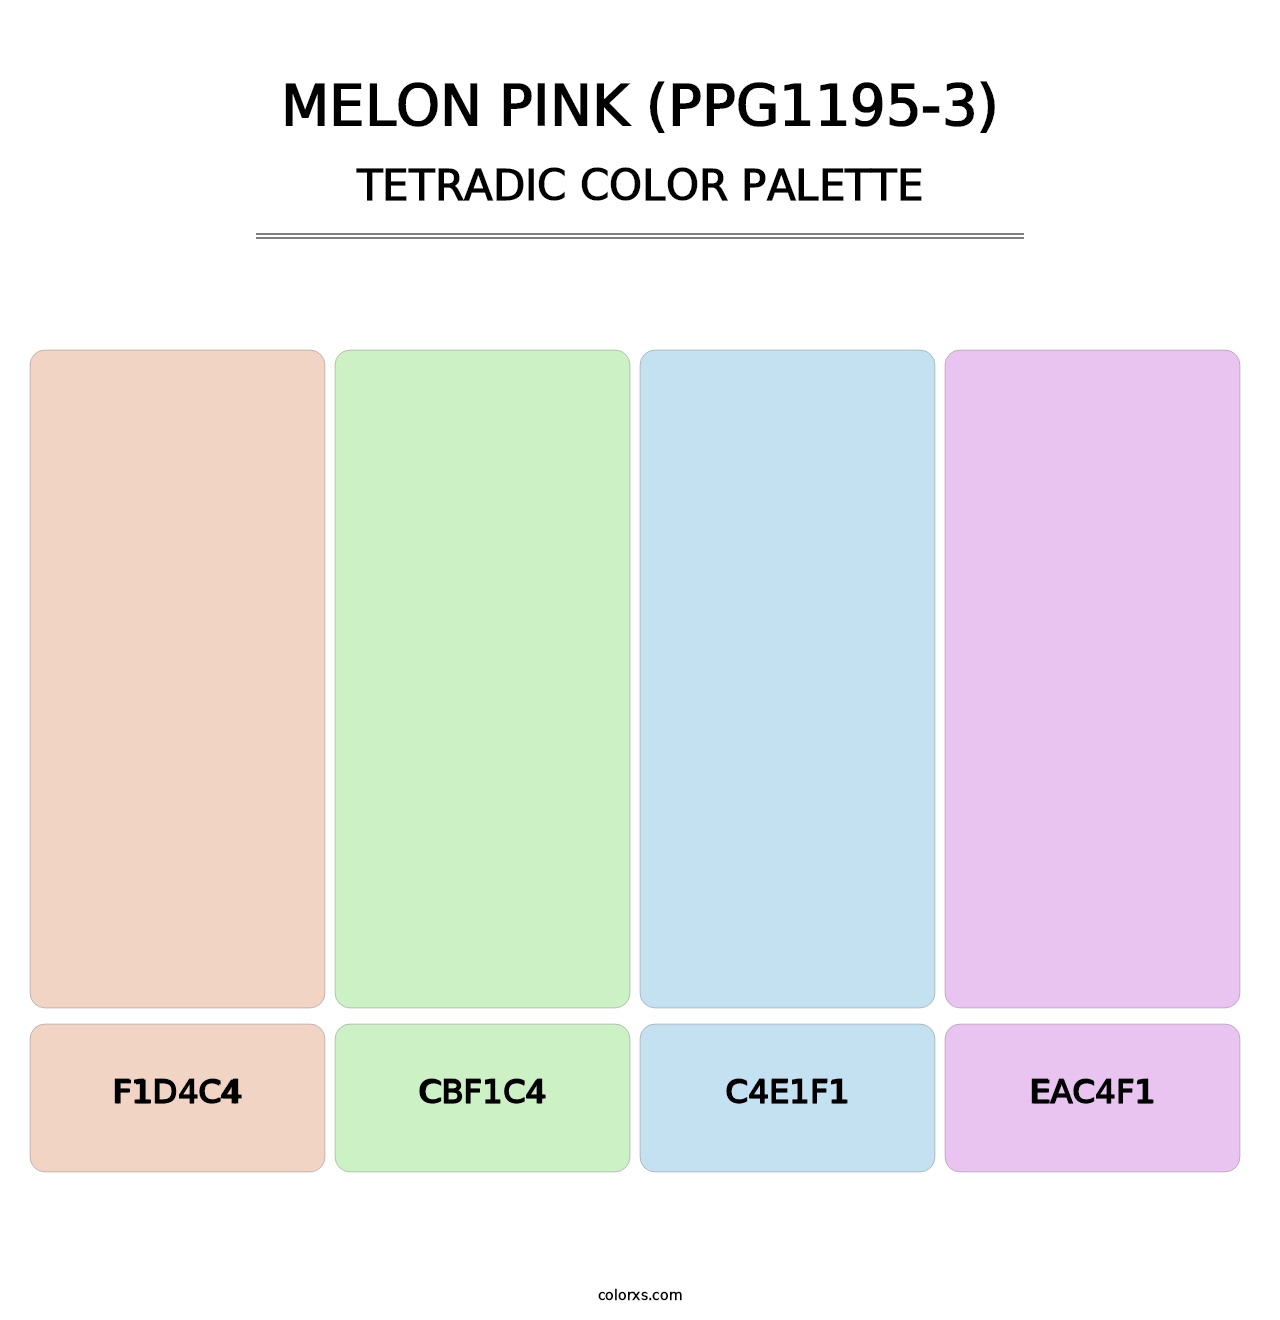 Melon Pink (PPG1195-3) - Tetradic Color Palette